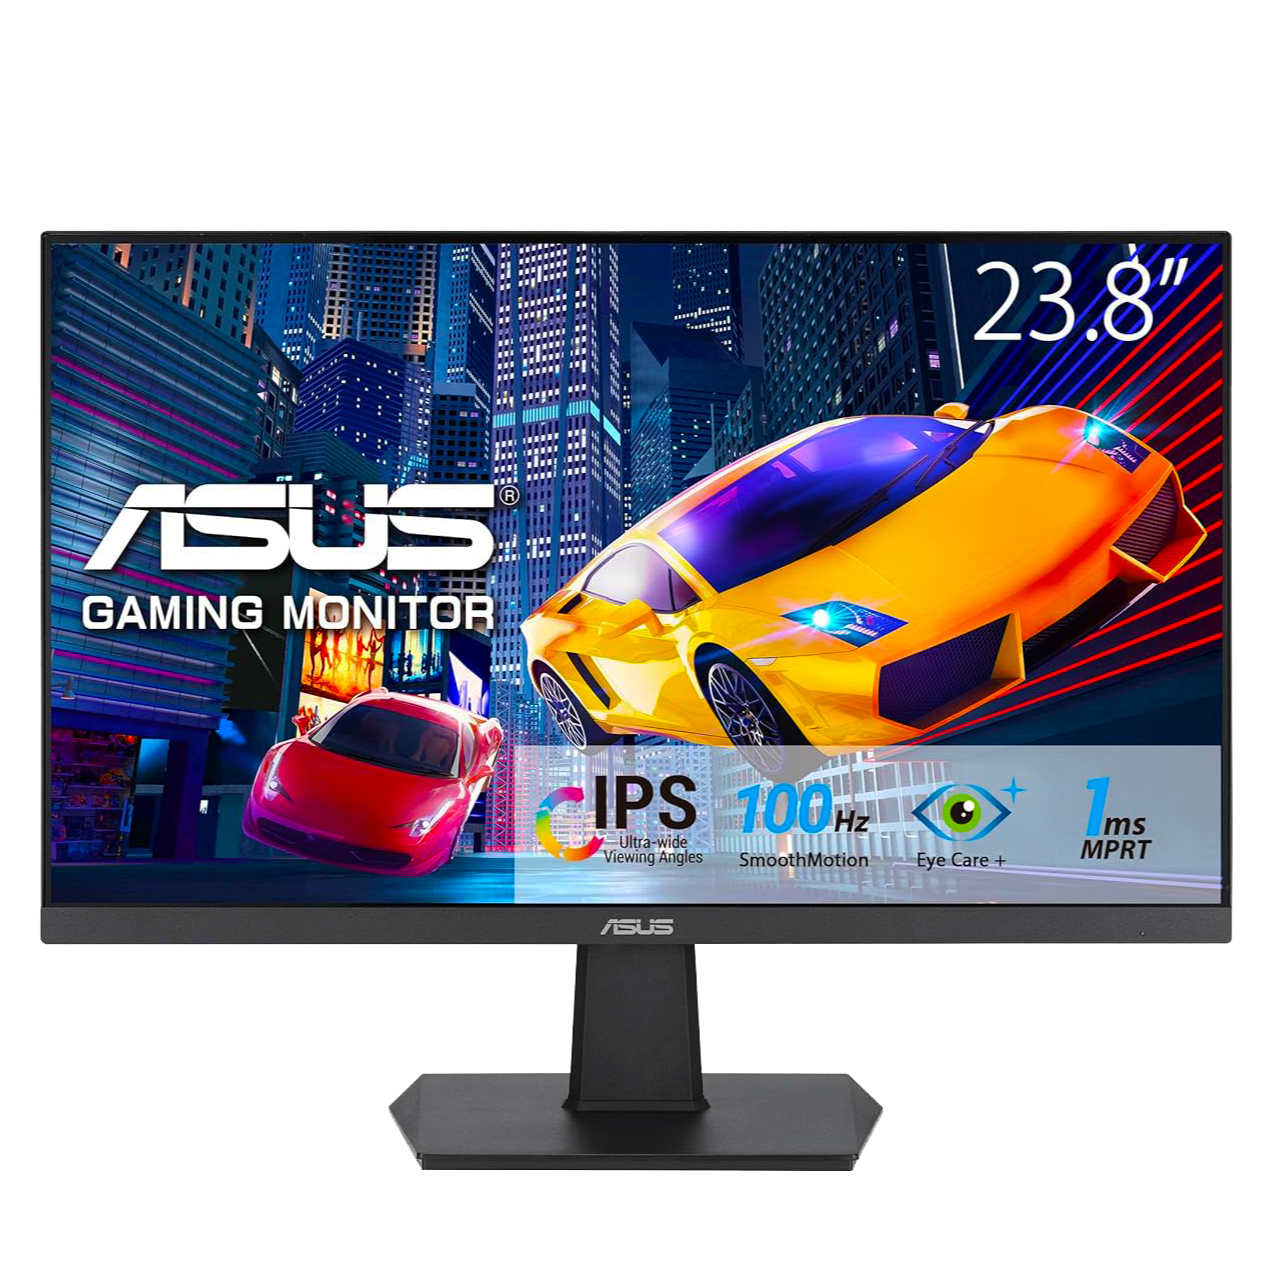 ASUS VA24EHF 23.8" 1080P FHD IPS 100Hz Gaming Monitor